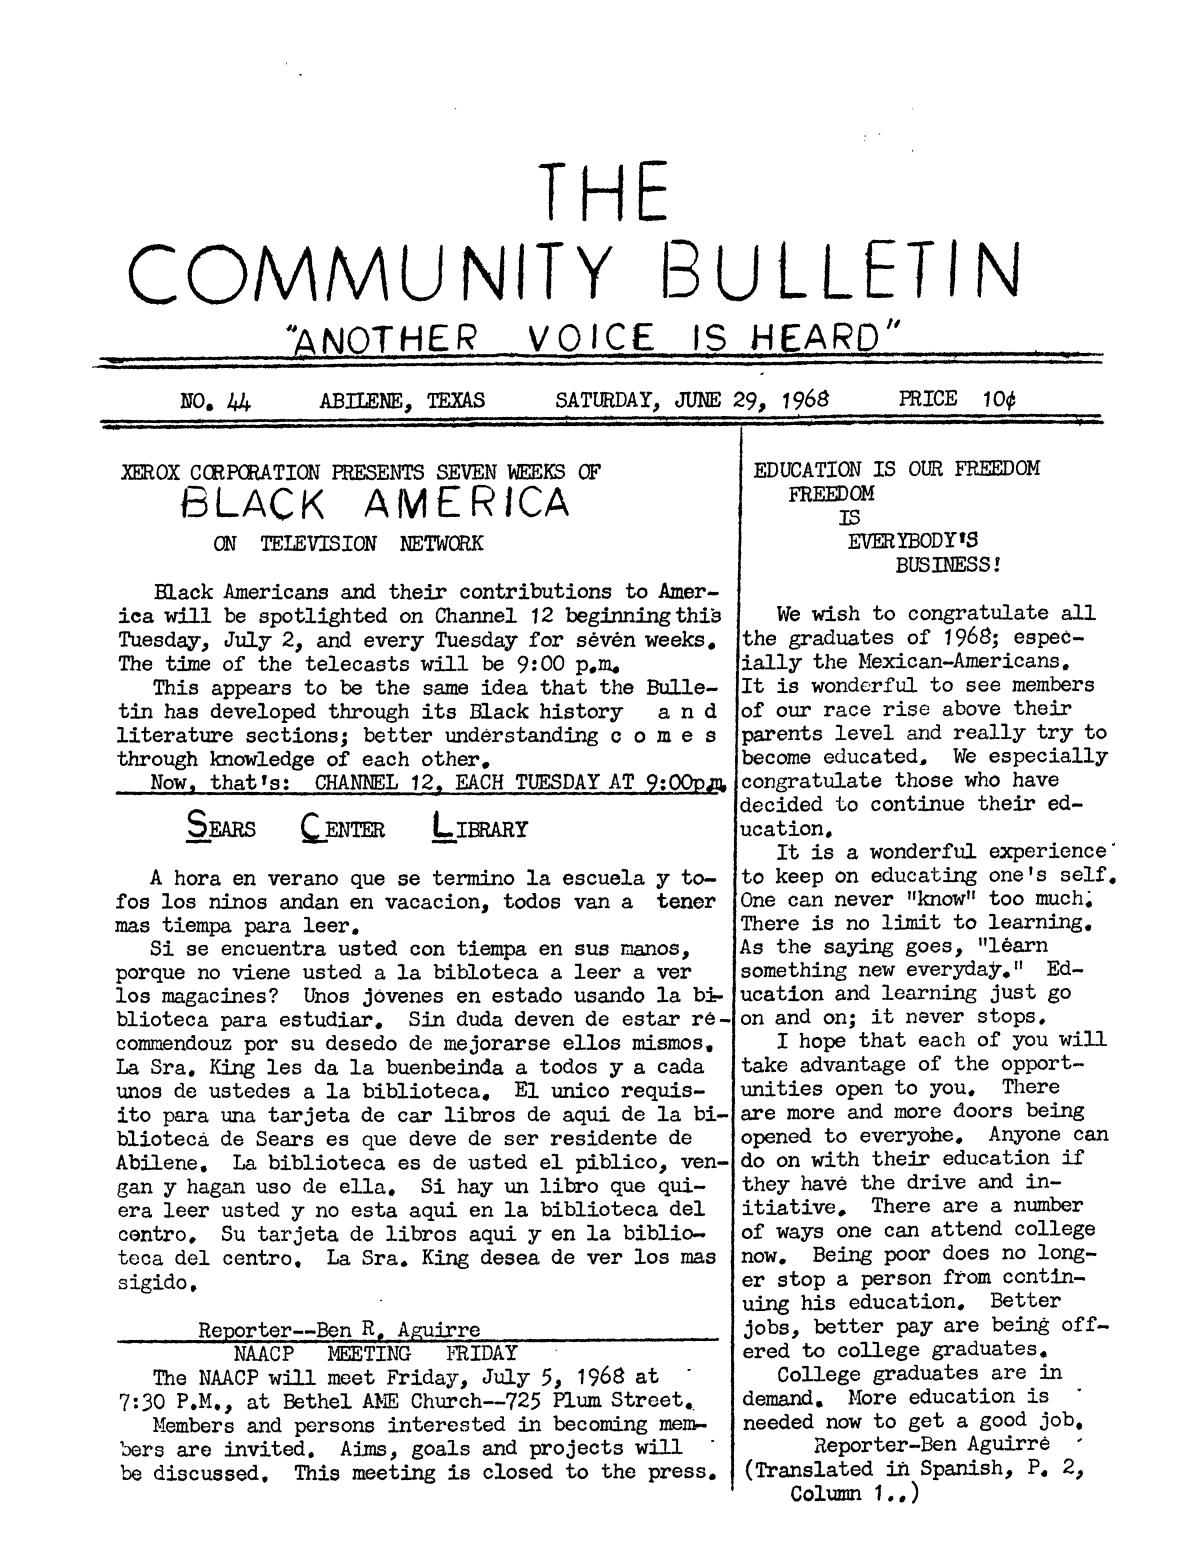 The Community Bulletin (Abilene, Texas), No. 44, Saturday, June 29, 1968
                                                
                                                    1
                                                